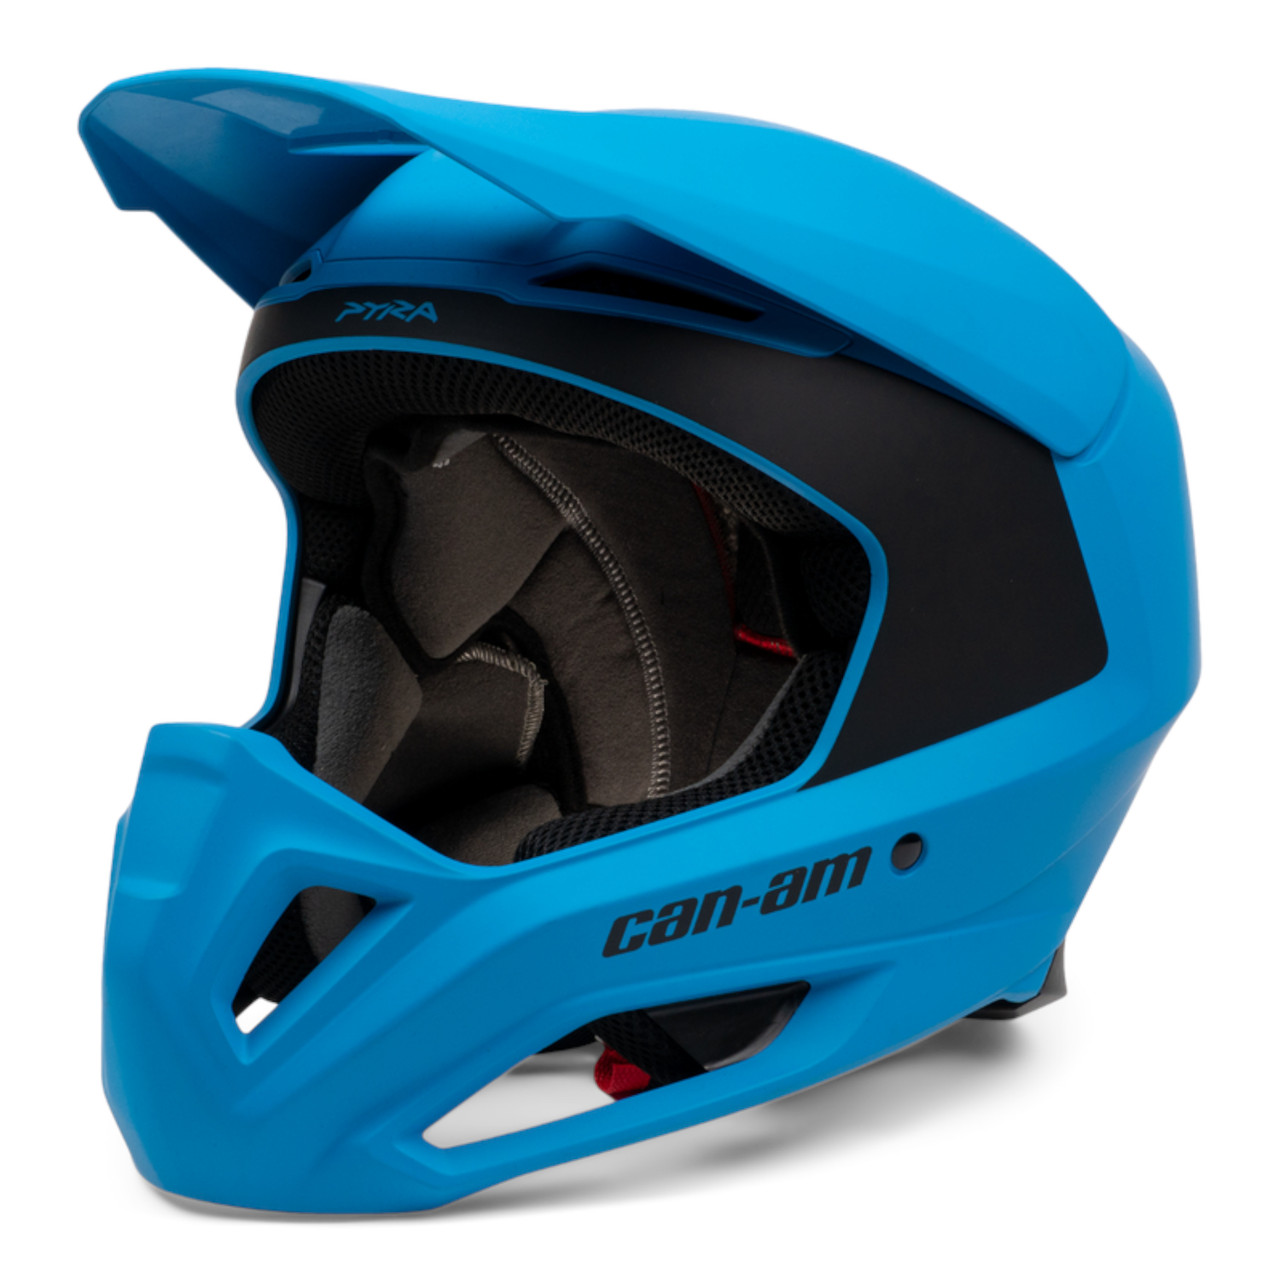 Can-Am New OEM 2XL Branded Pyra Helmet (DOT/ECE), 9290381480